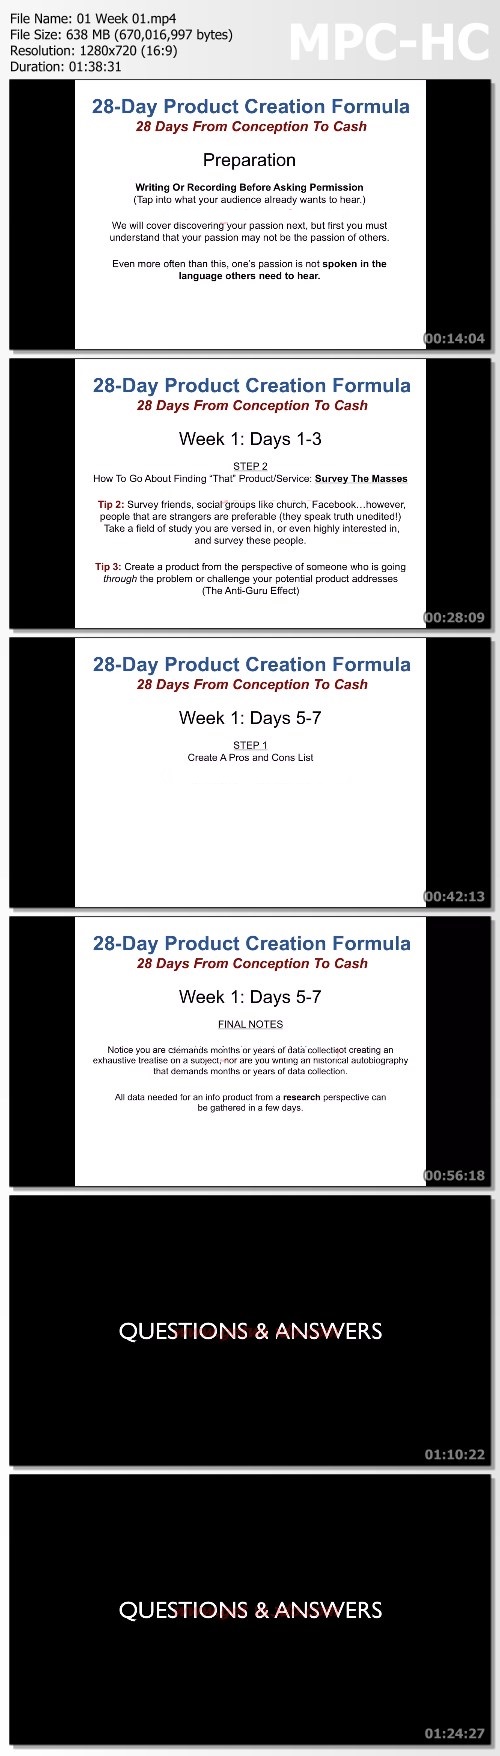 Jon Benson - The 28 Day Product Creation Formula